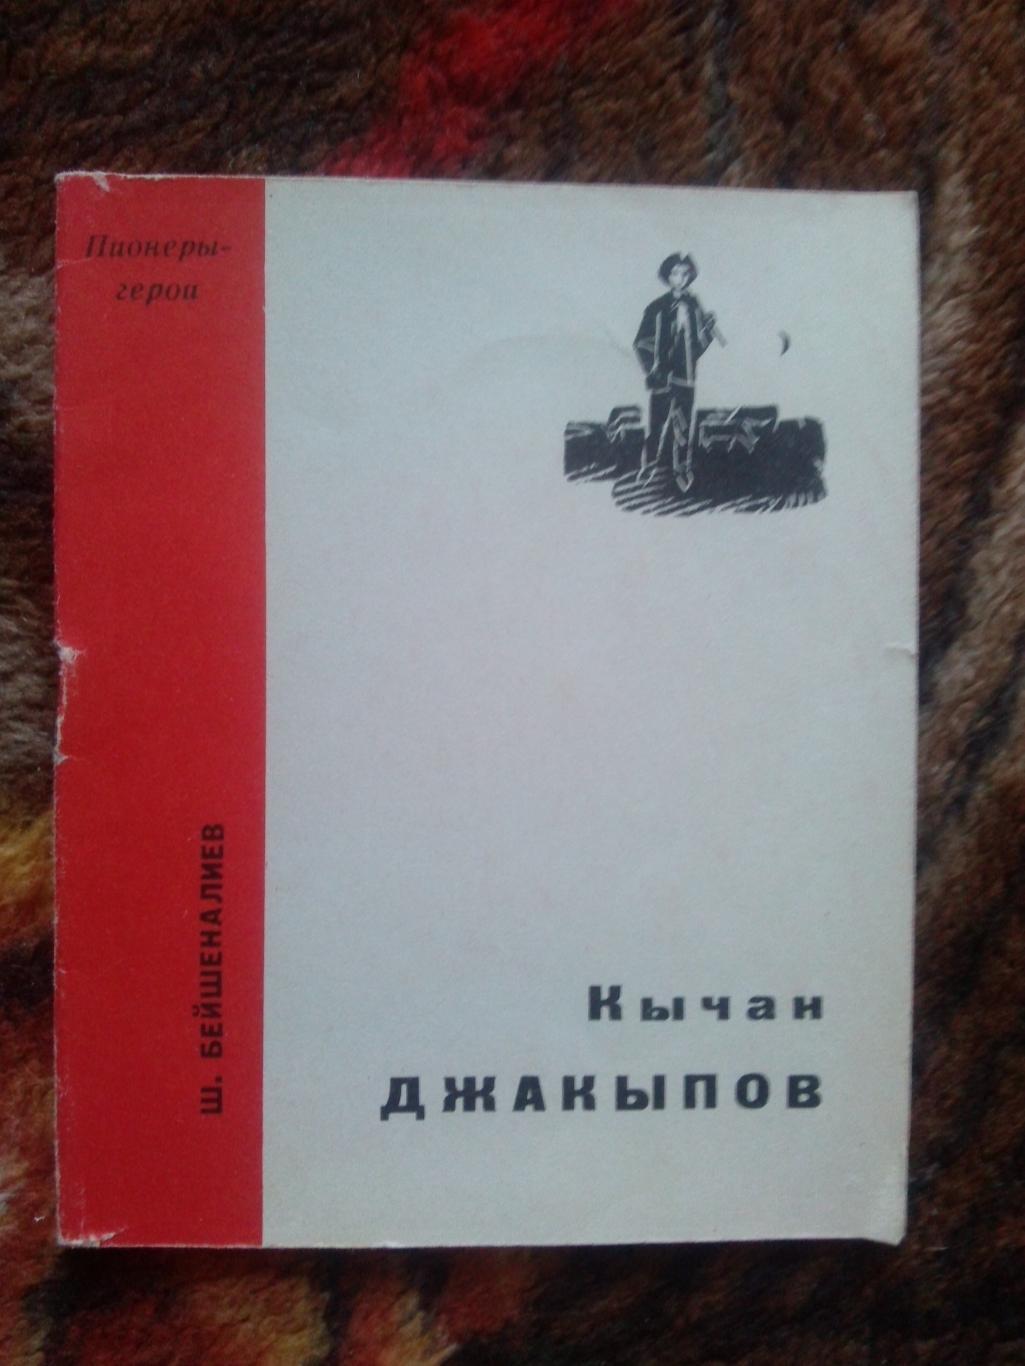 Пионеры-герои (Плакат + брошюра) 1967 г. Кычан Джакыпов (Пионер , агитация) 3